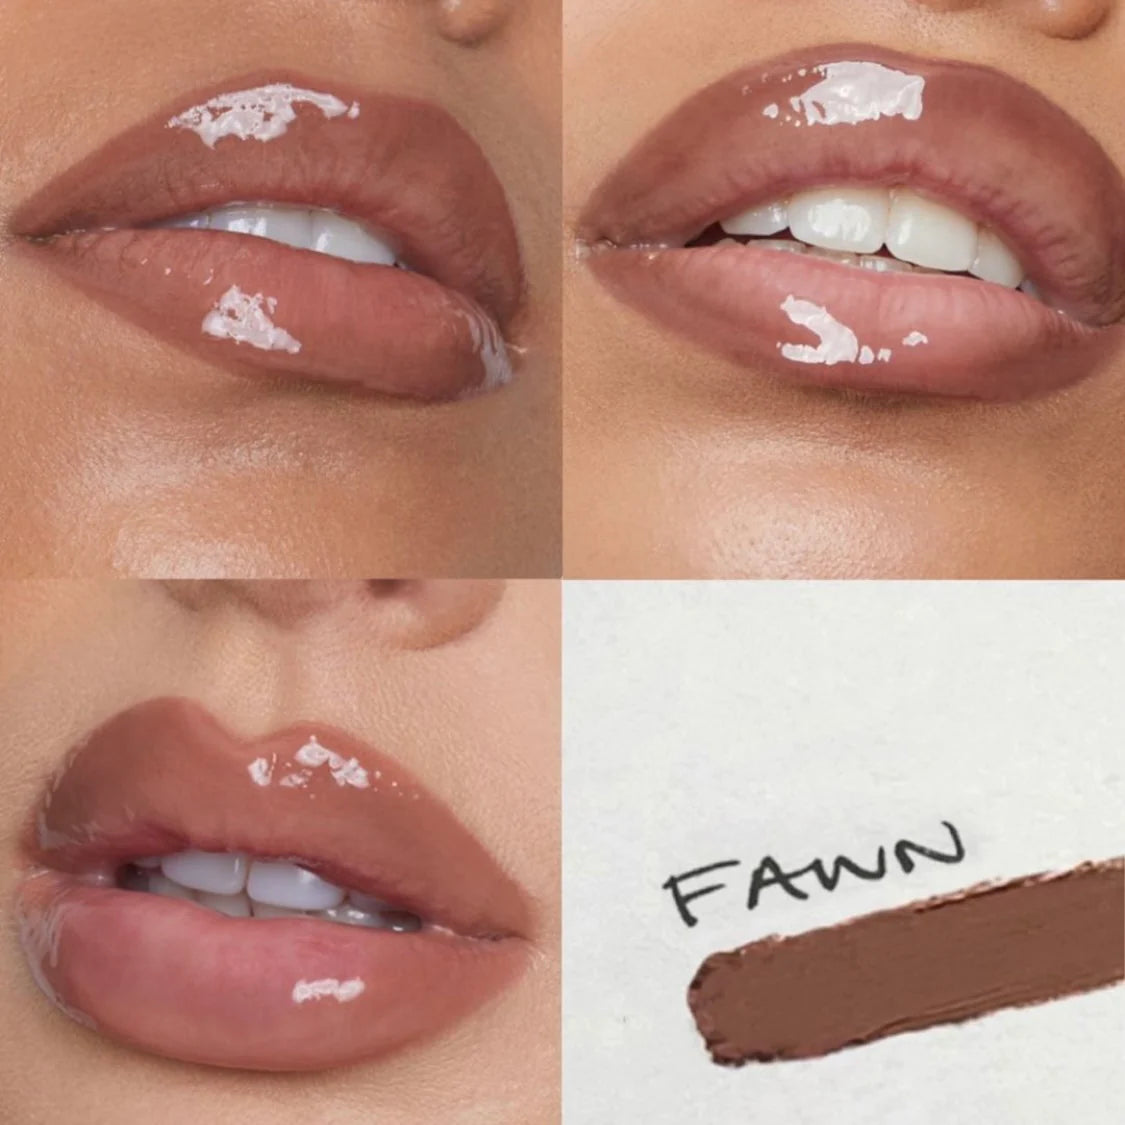 Lip Sculpt Lip Liner and Setter- Choose your fav